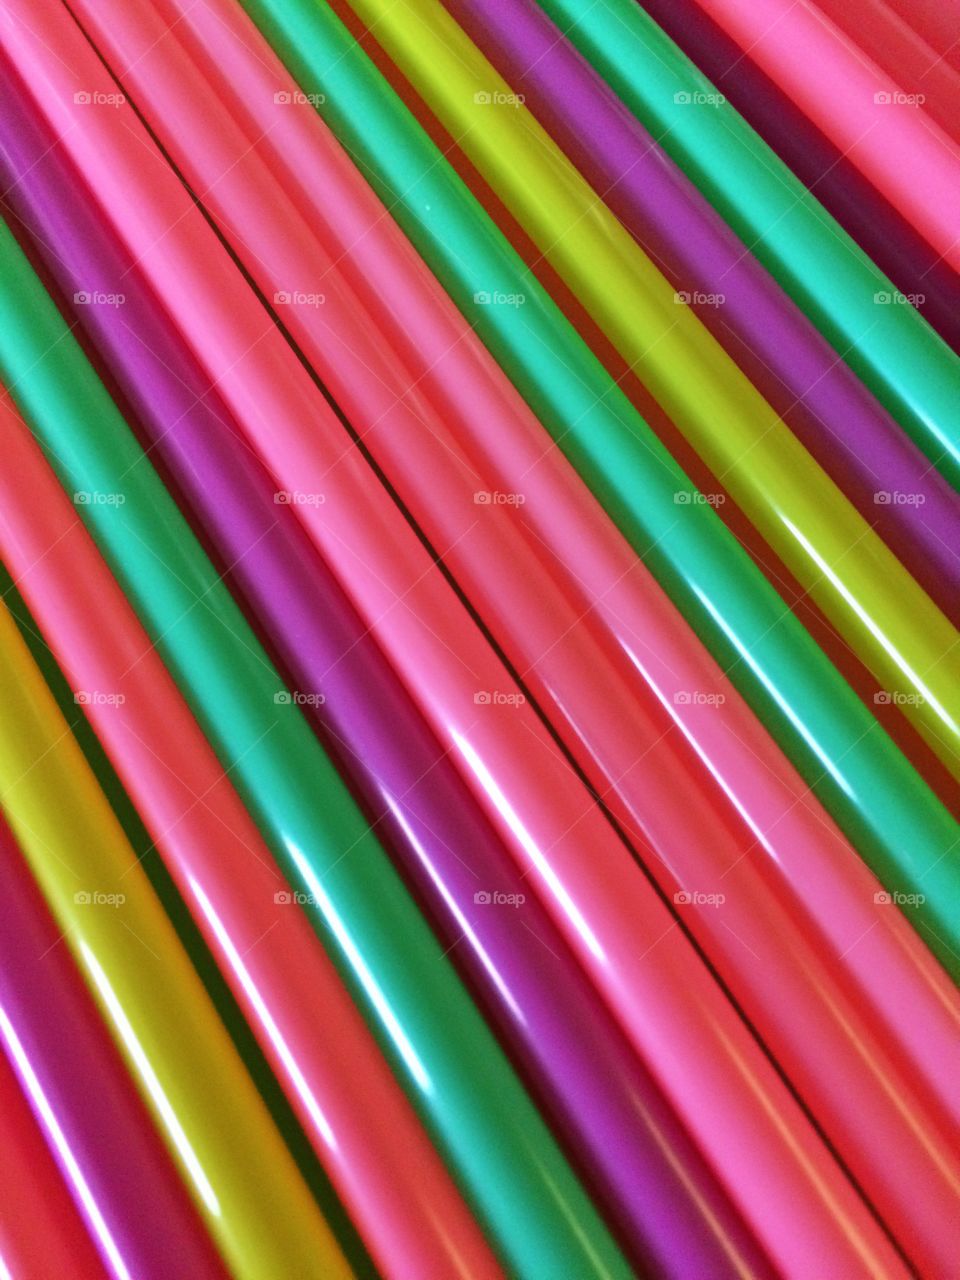 Straws. Colorful straws